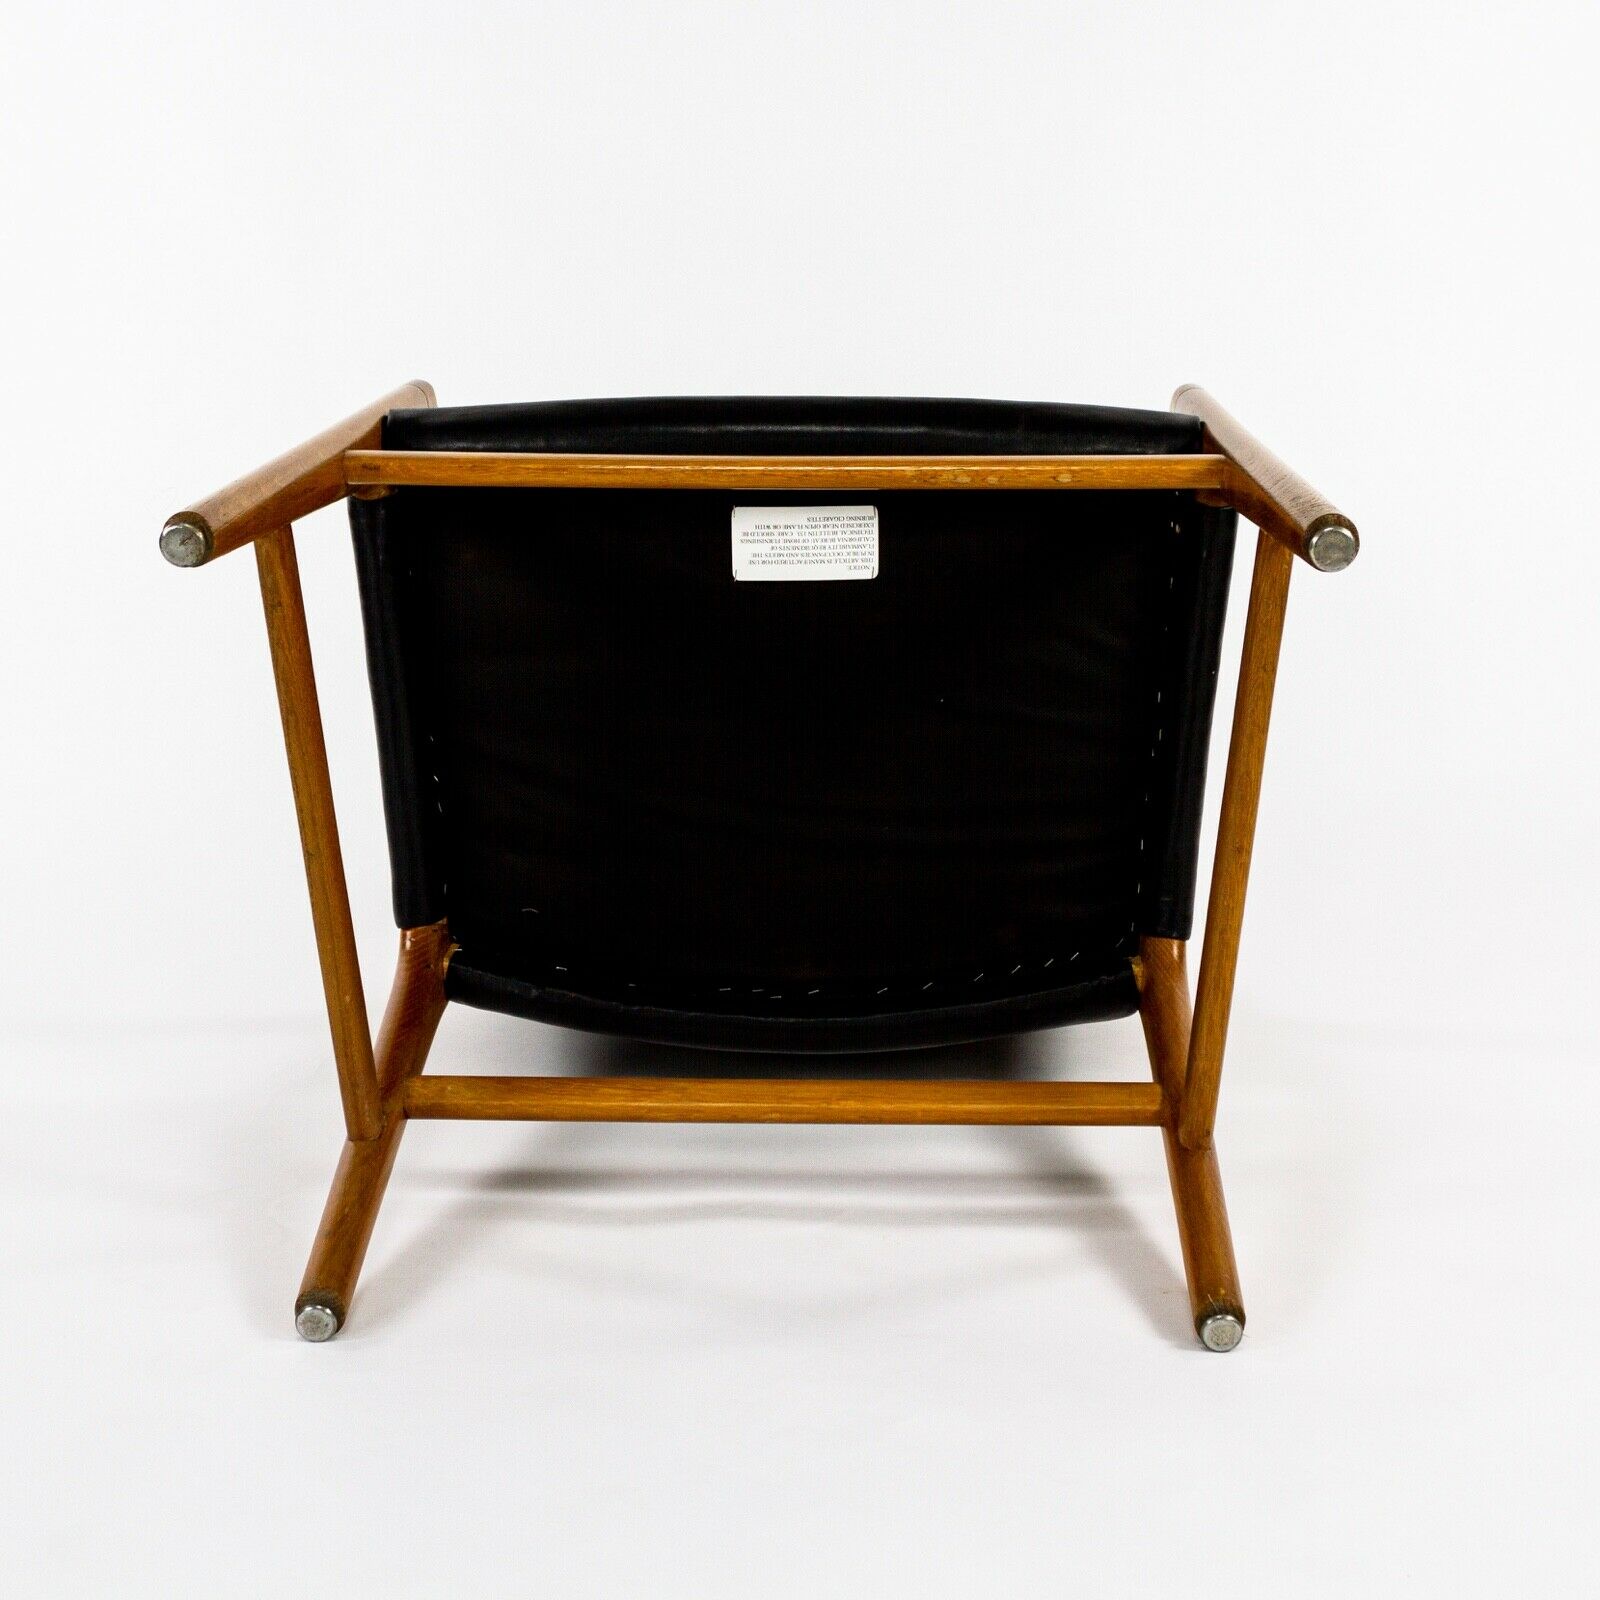 1965 Hans Wegner Johannes Hansen JH 507 Oak Dining Chairs from Harvard 12x Available